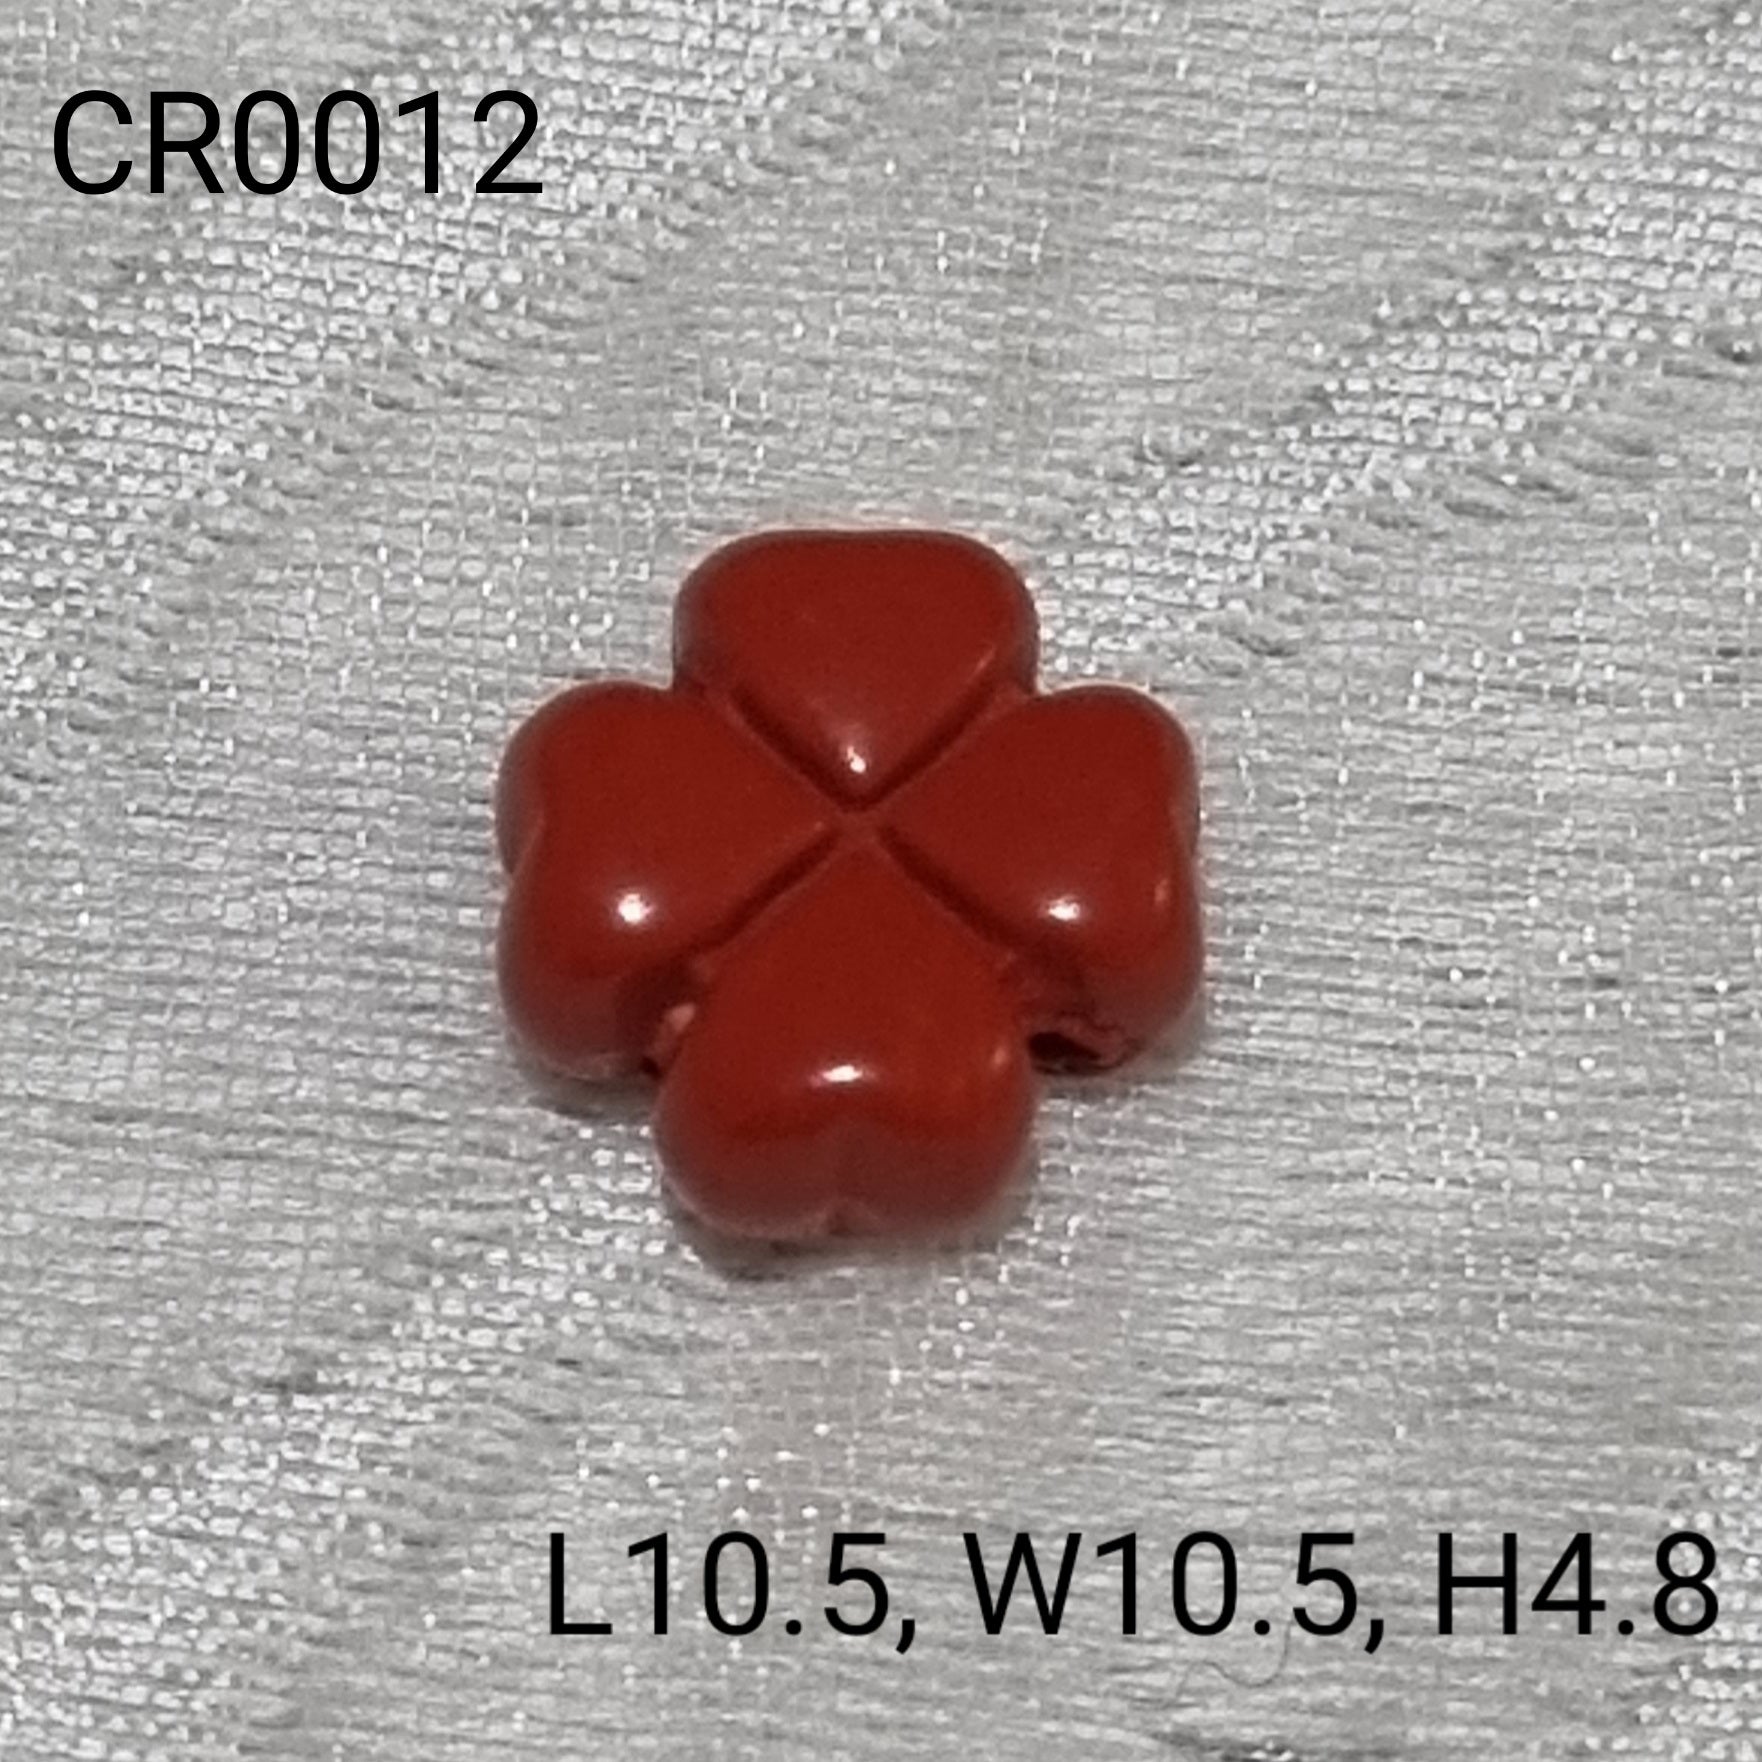 CR0012 - Cinnabar Accessories - Four leaves Clover